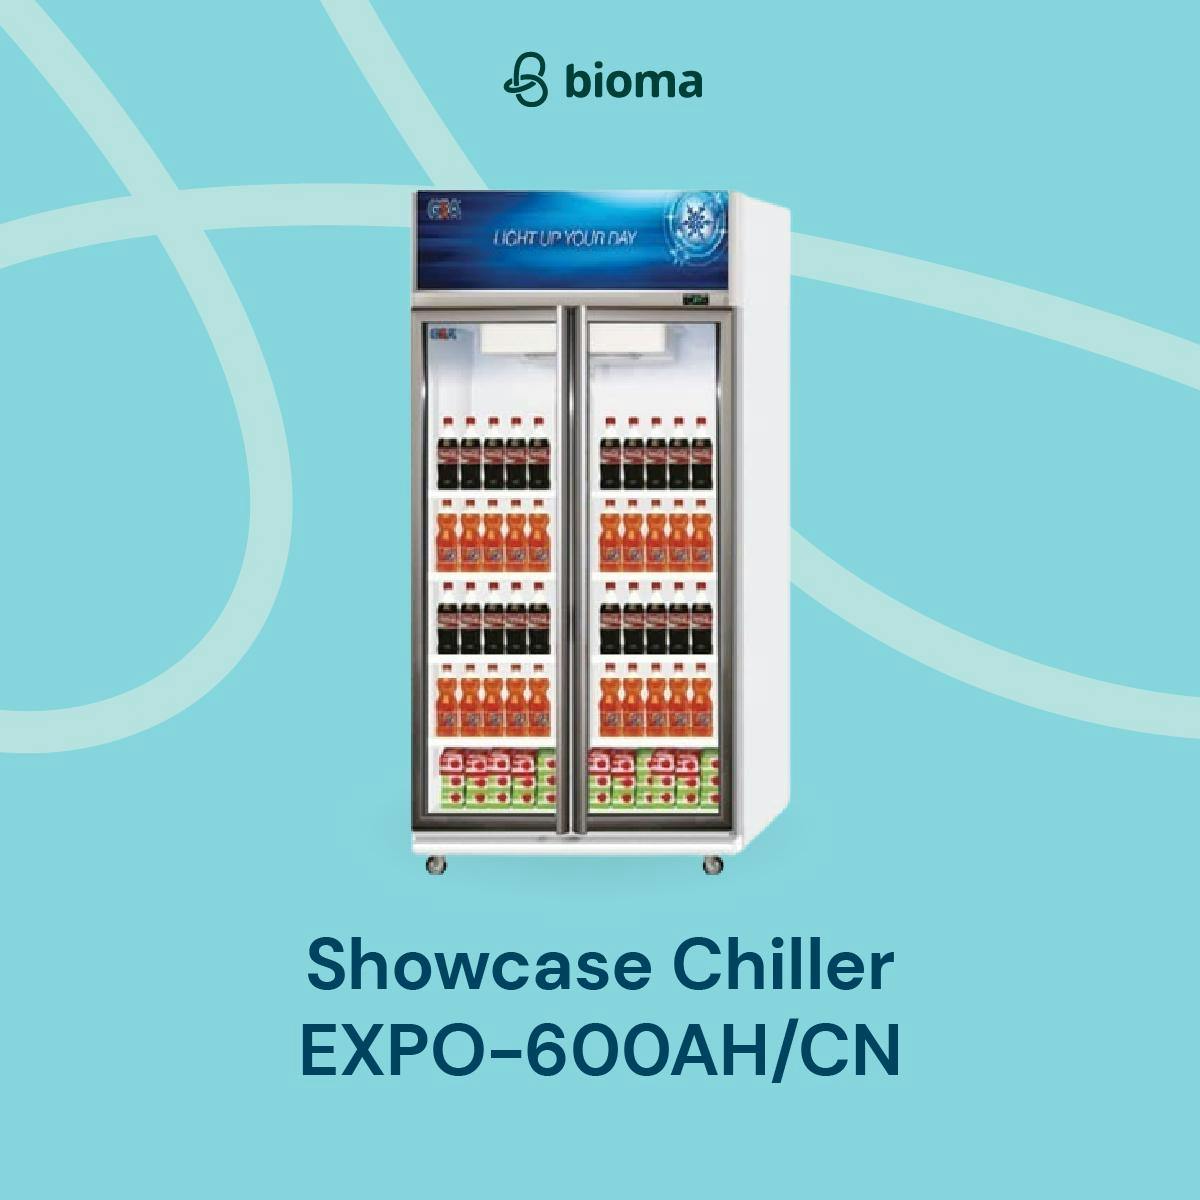 Showcase Chiller EXPO-600AH/CN